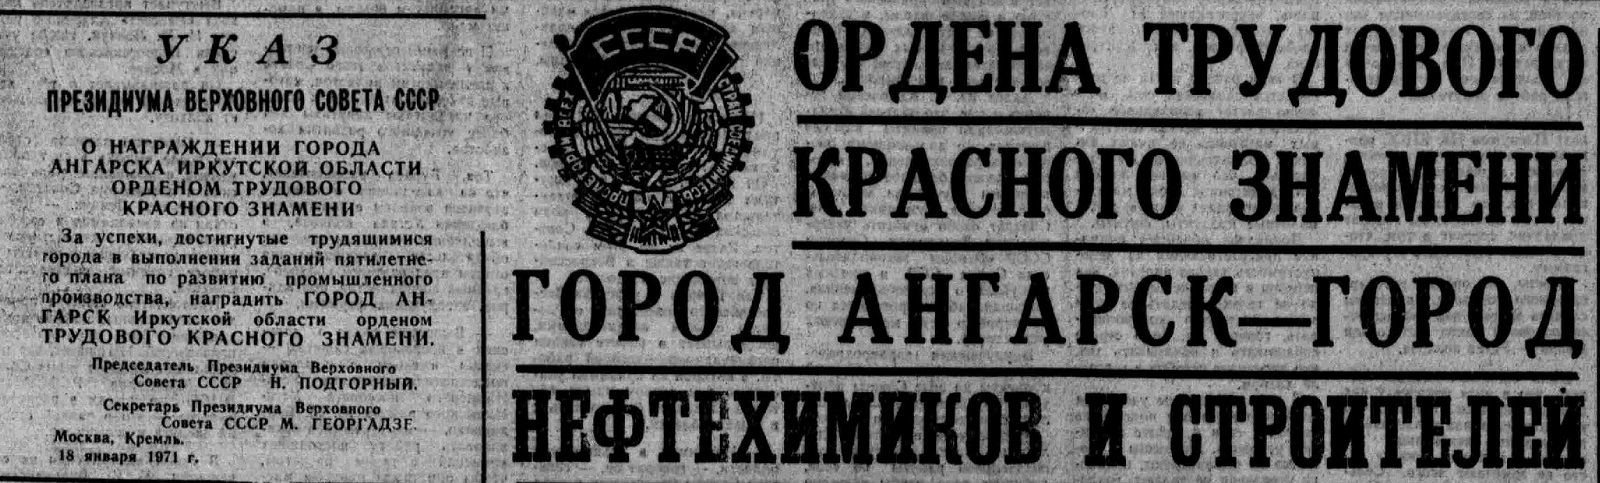 Ангарск орден Трудового Красного знамени